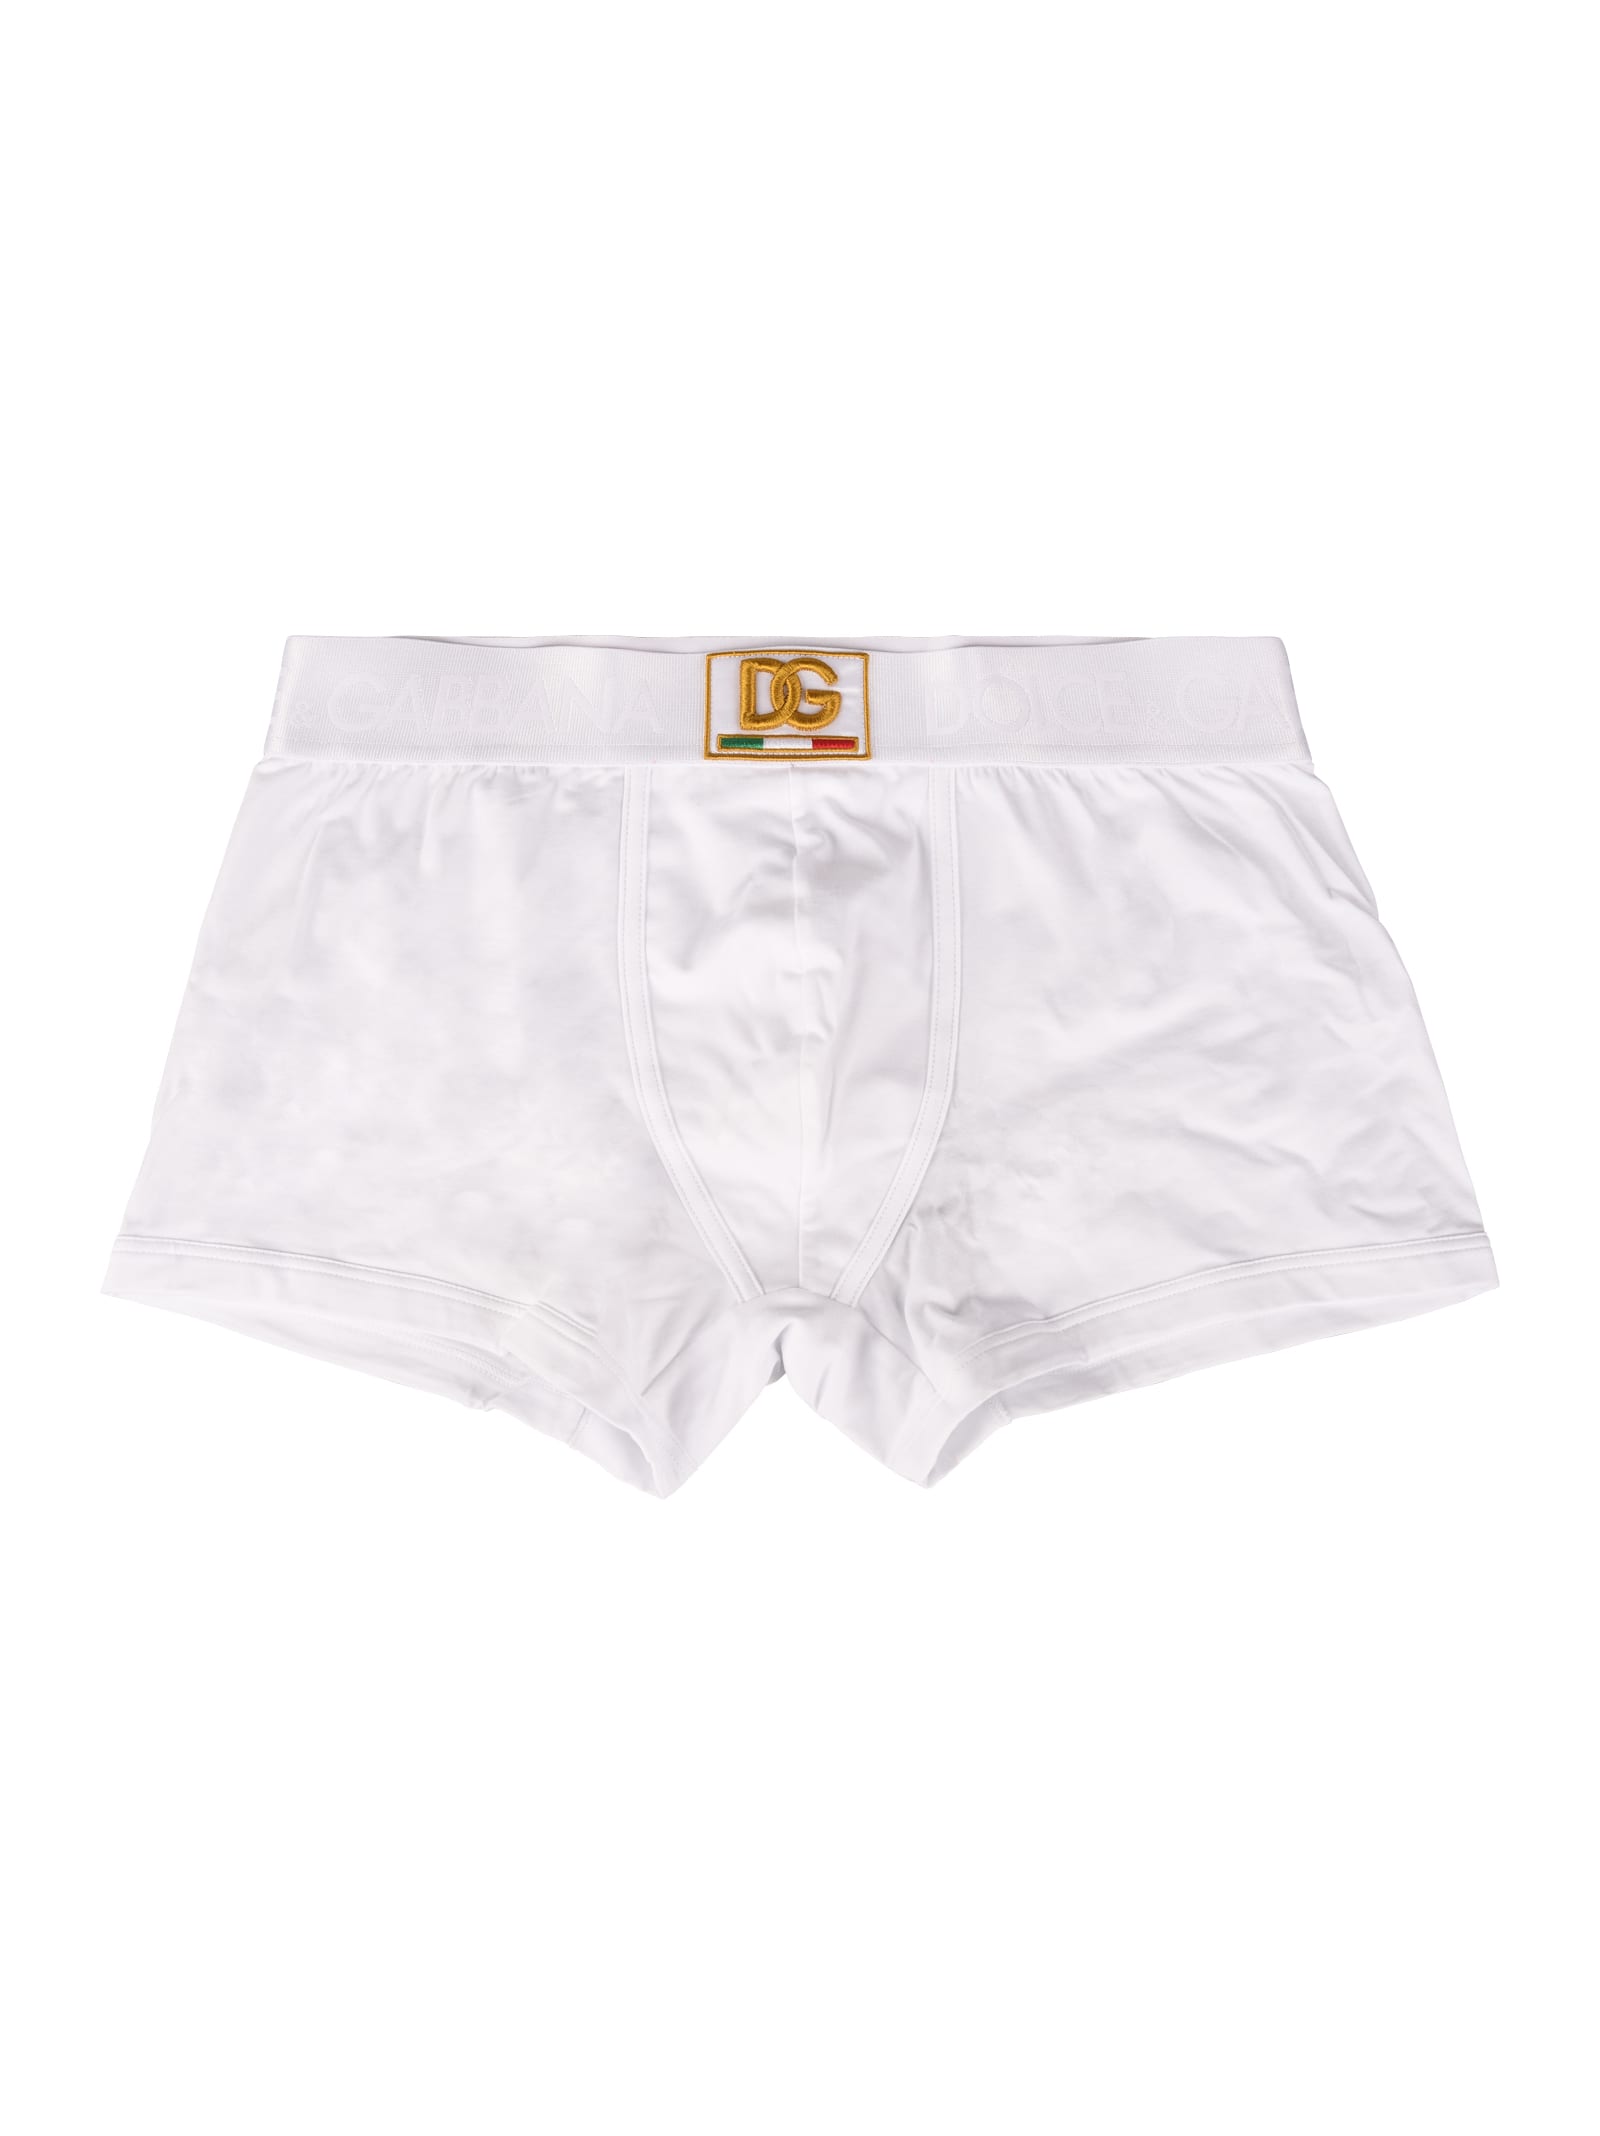 Dolce & Gabbana Elastic Waist Logo Boxer Shorts